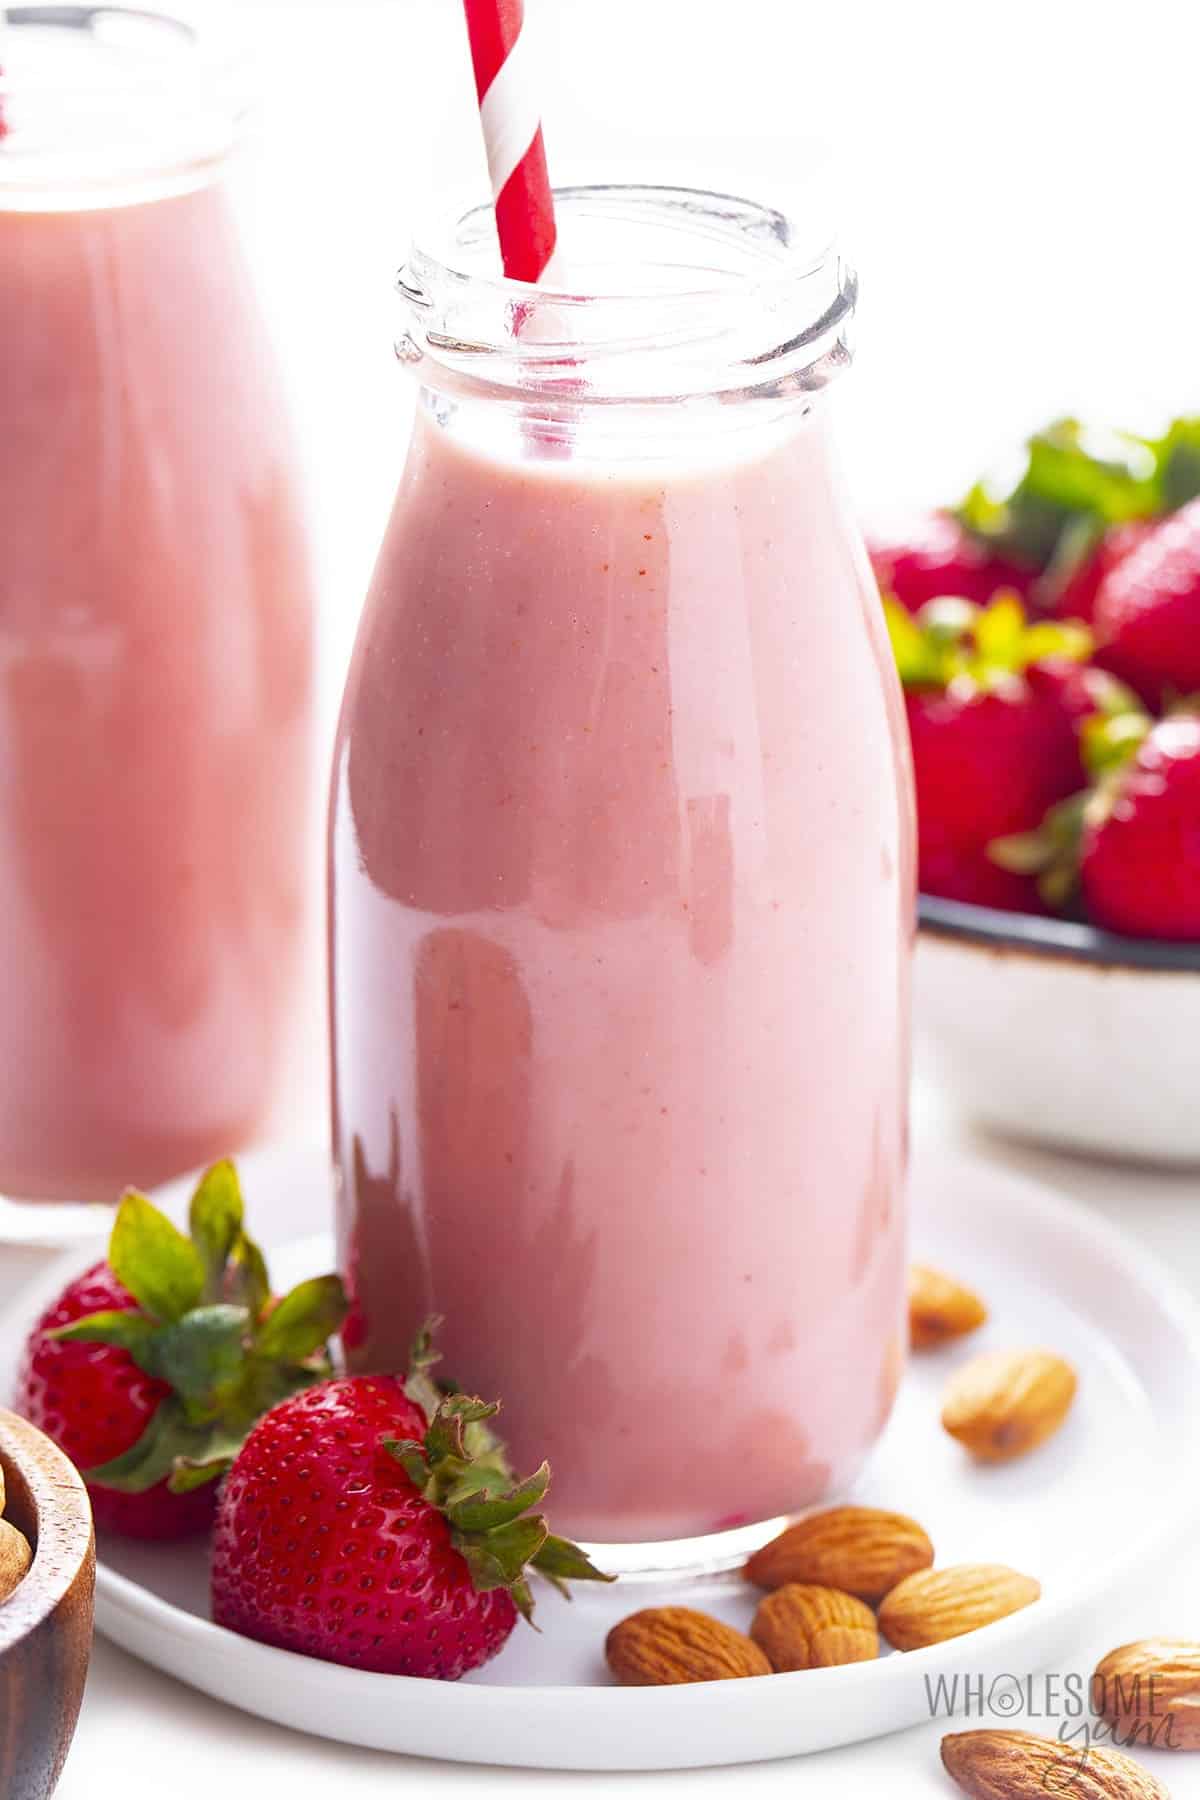 Glass bottle of strawberry almond milk with straw.